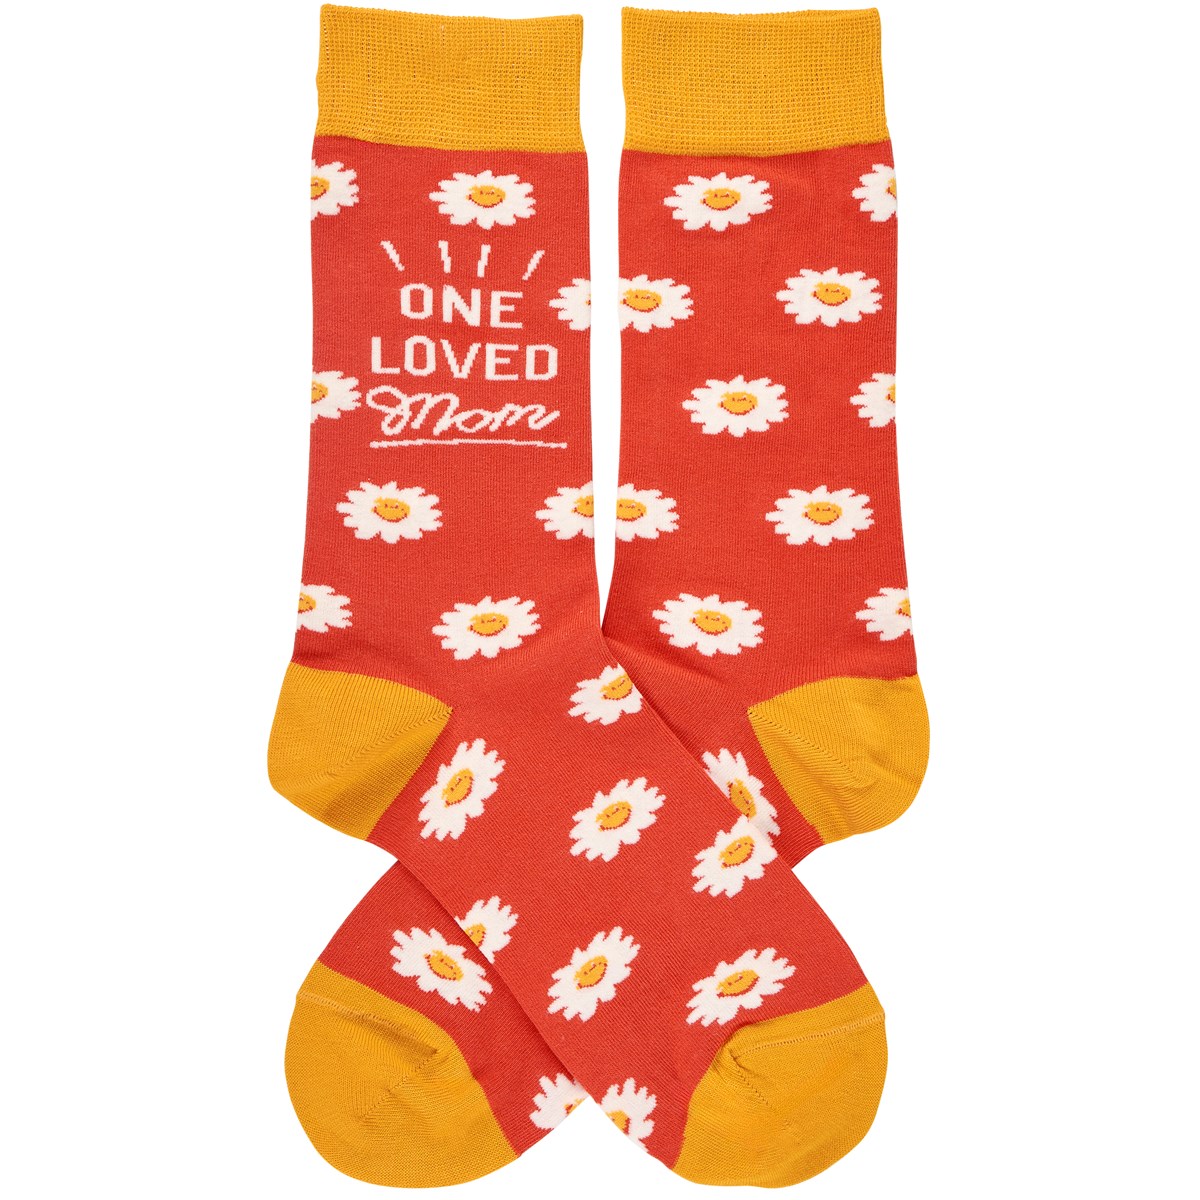 One Loved Mom Socks - Cotton, Nylon, Spandex